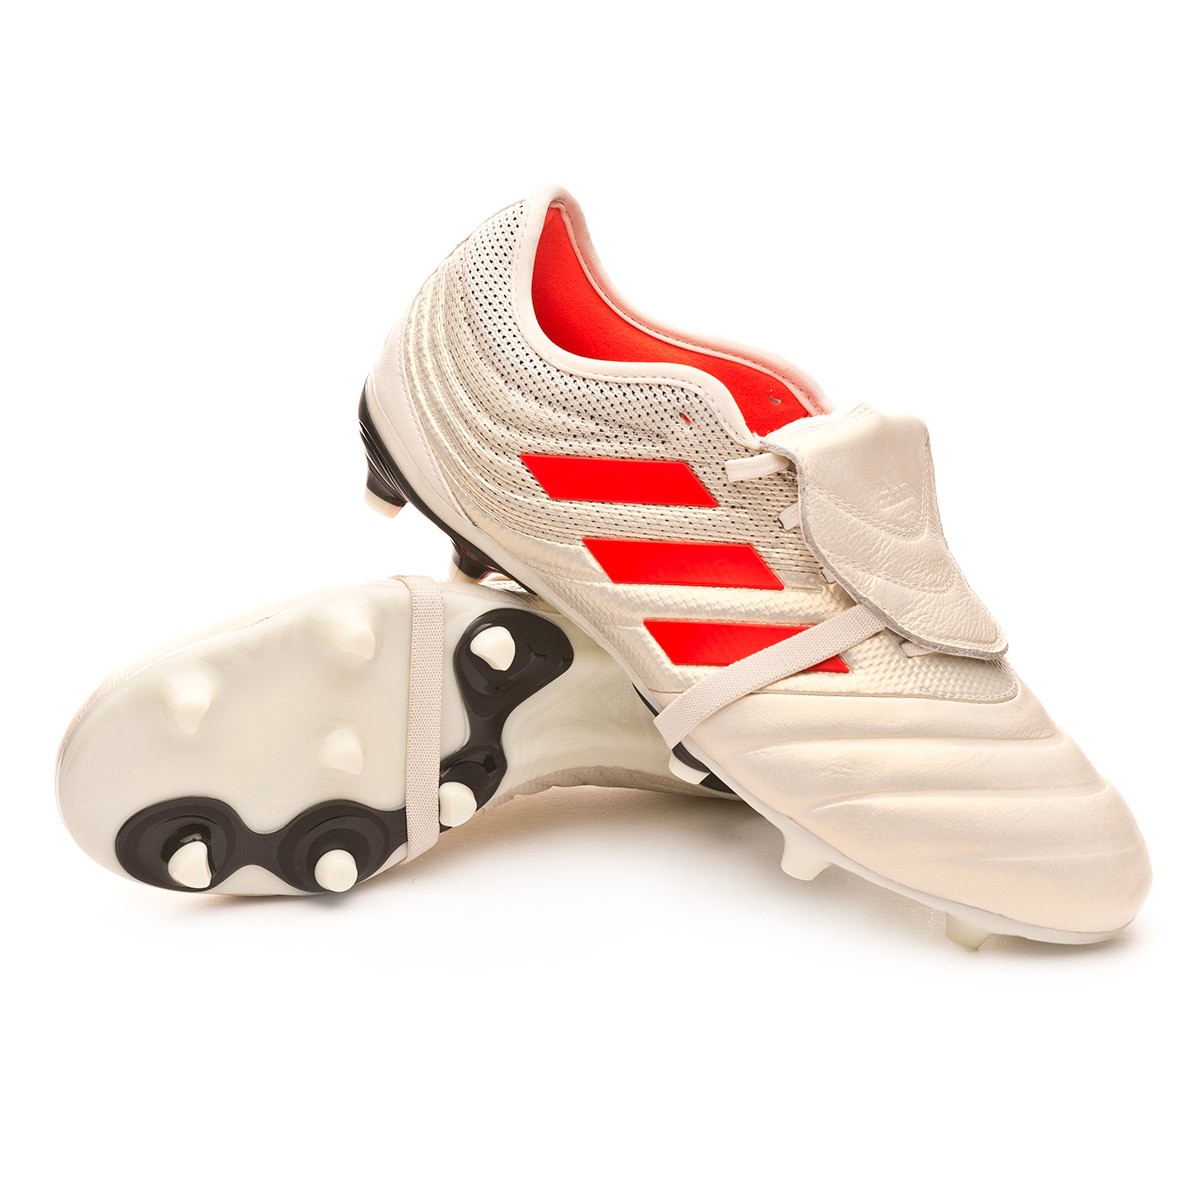 Football Boots adidas Copa Gloro 19.2 